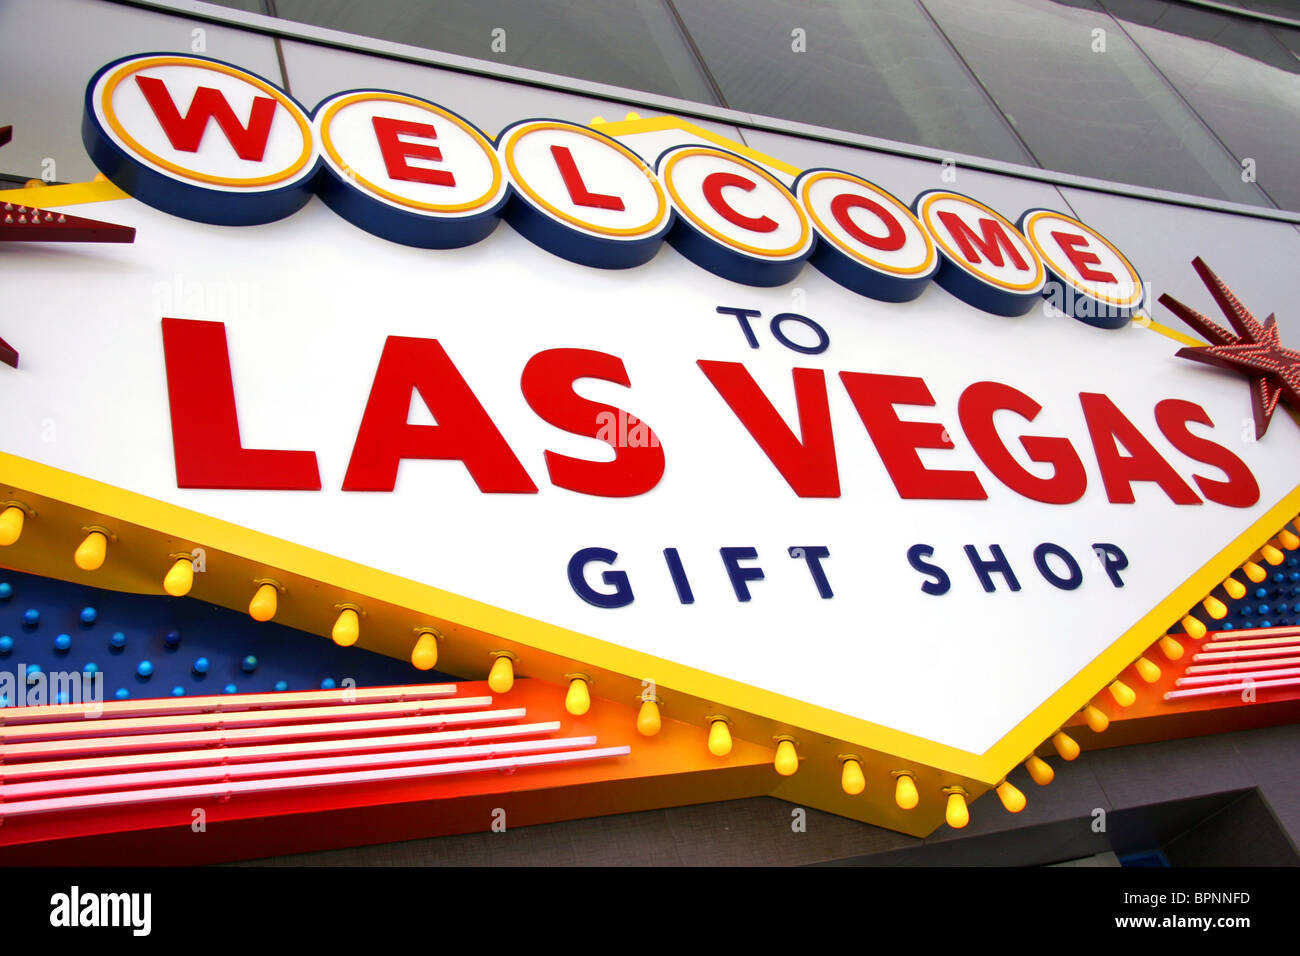 Welcome to Las Vegas Gift Shop sign, Las Vegas, Nevada, USA Stock Photo